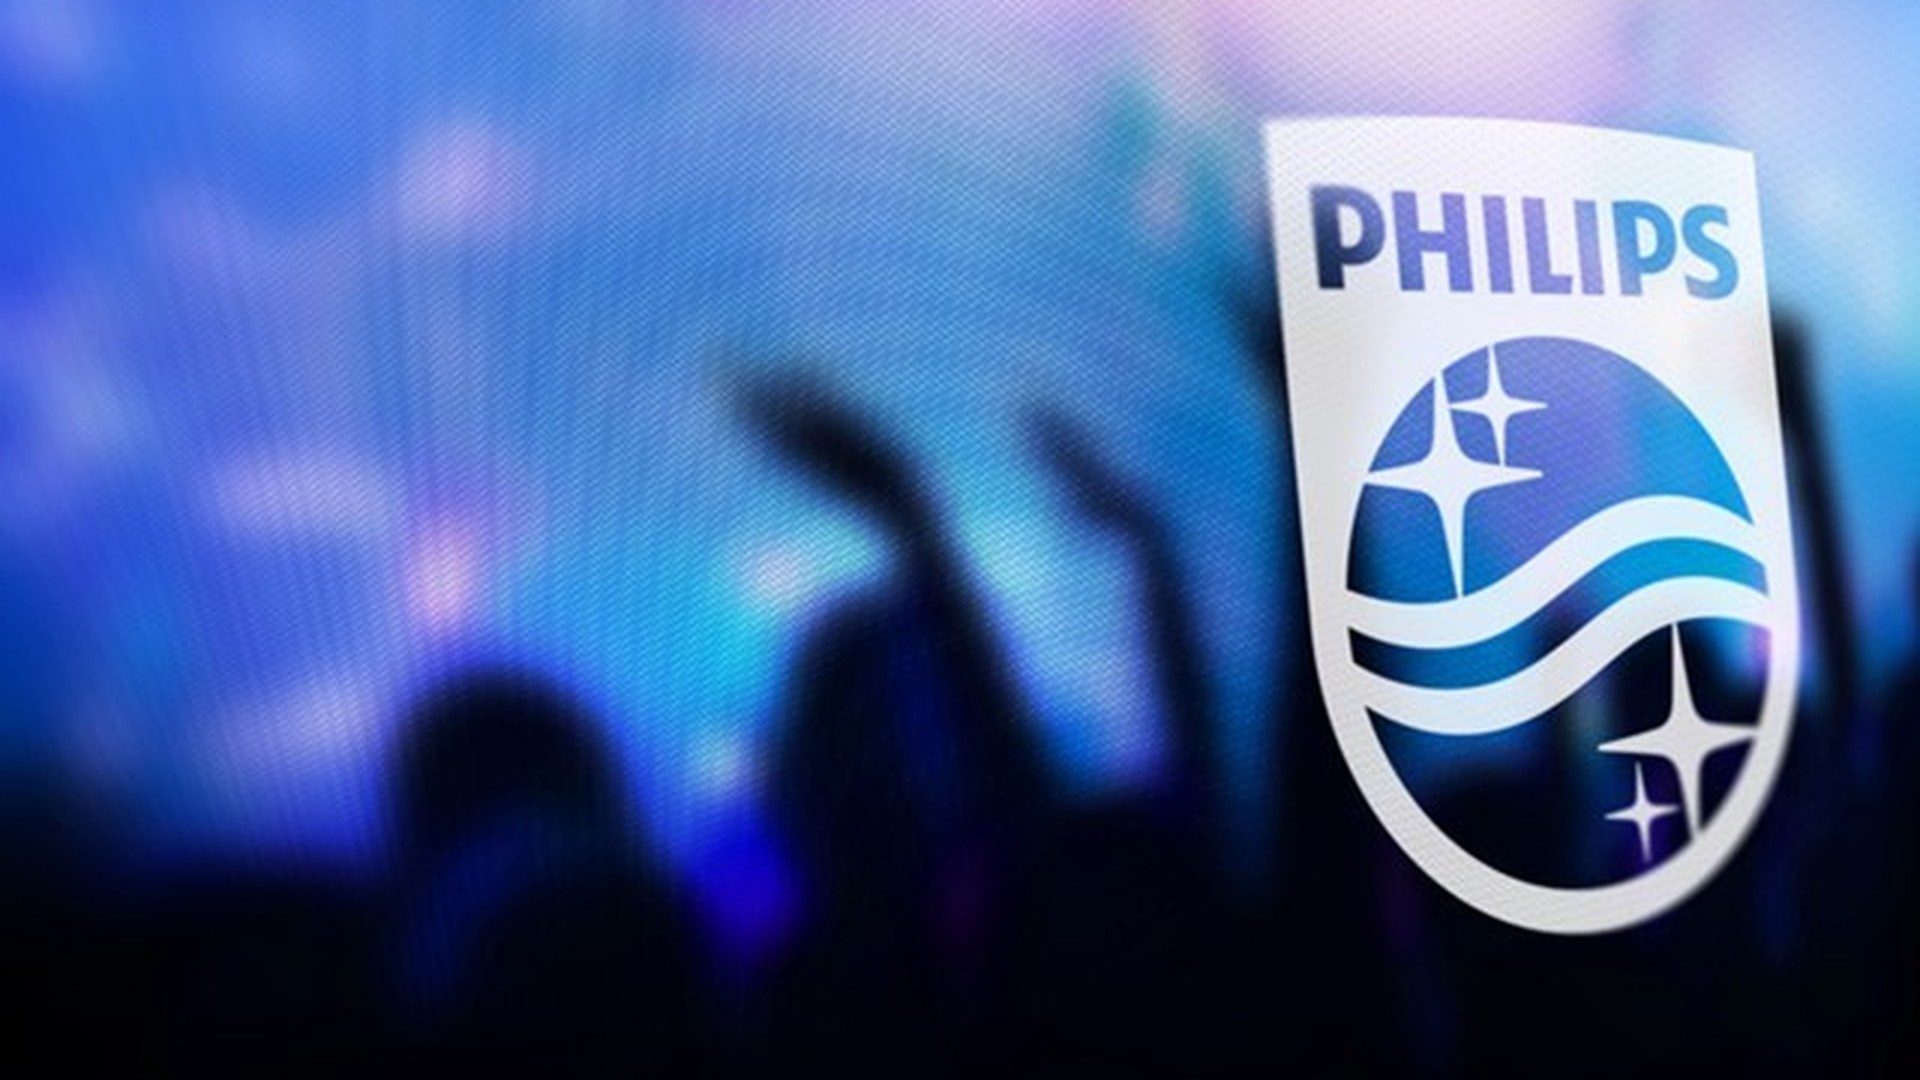 Бренд филипс. Philips. Обои Philips. Заставка Филипс. Филипс логотип.